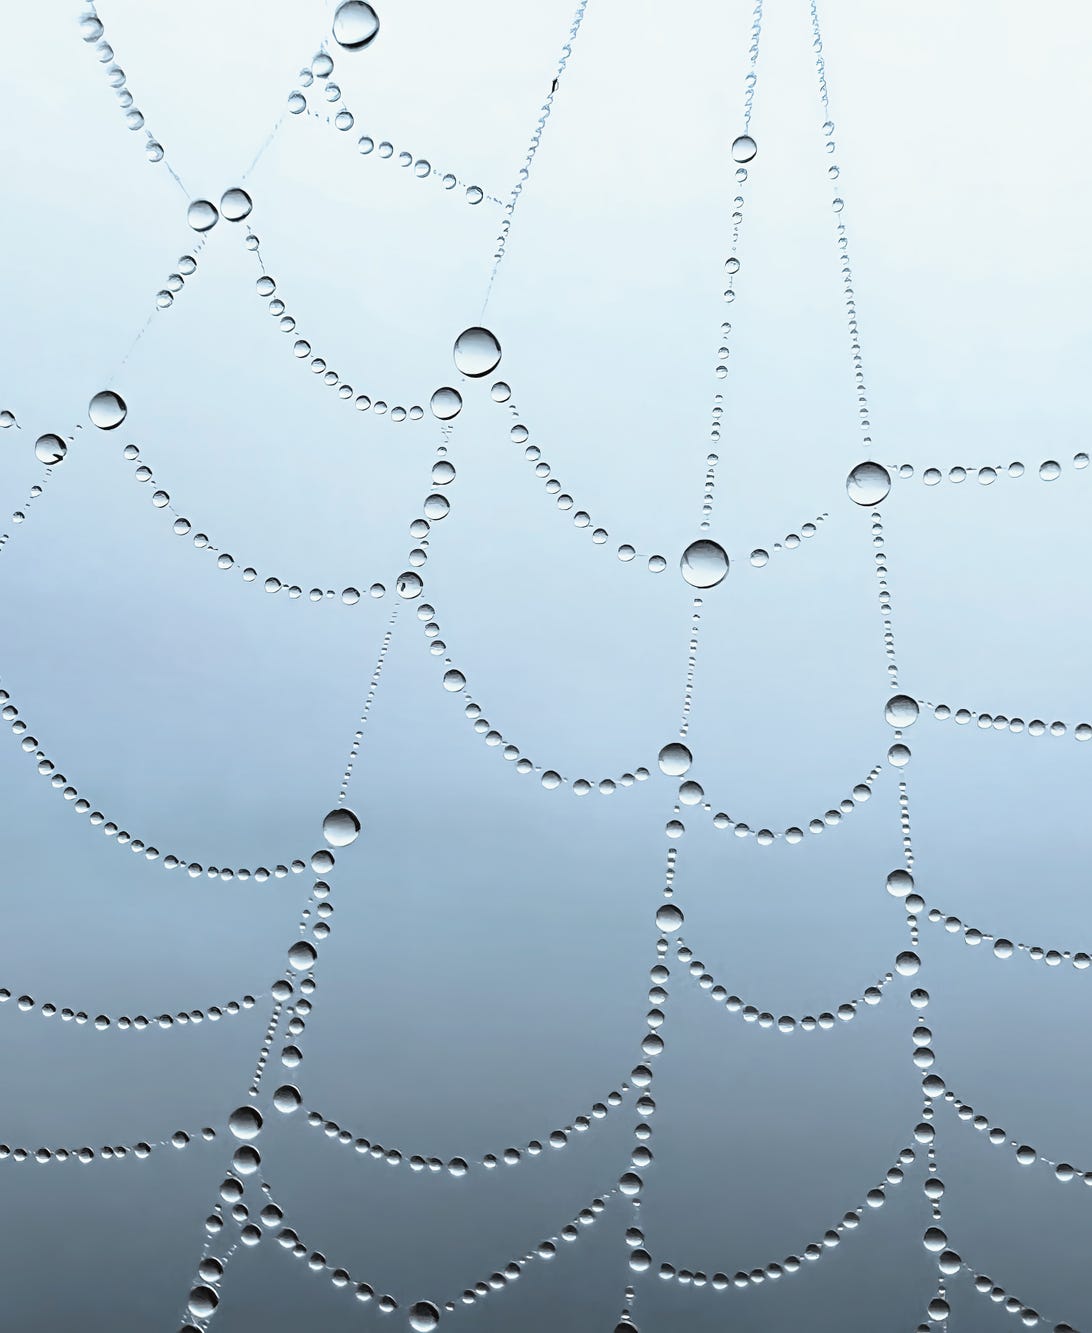 Dewdrops captured on a spider web.